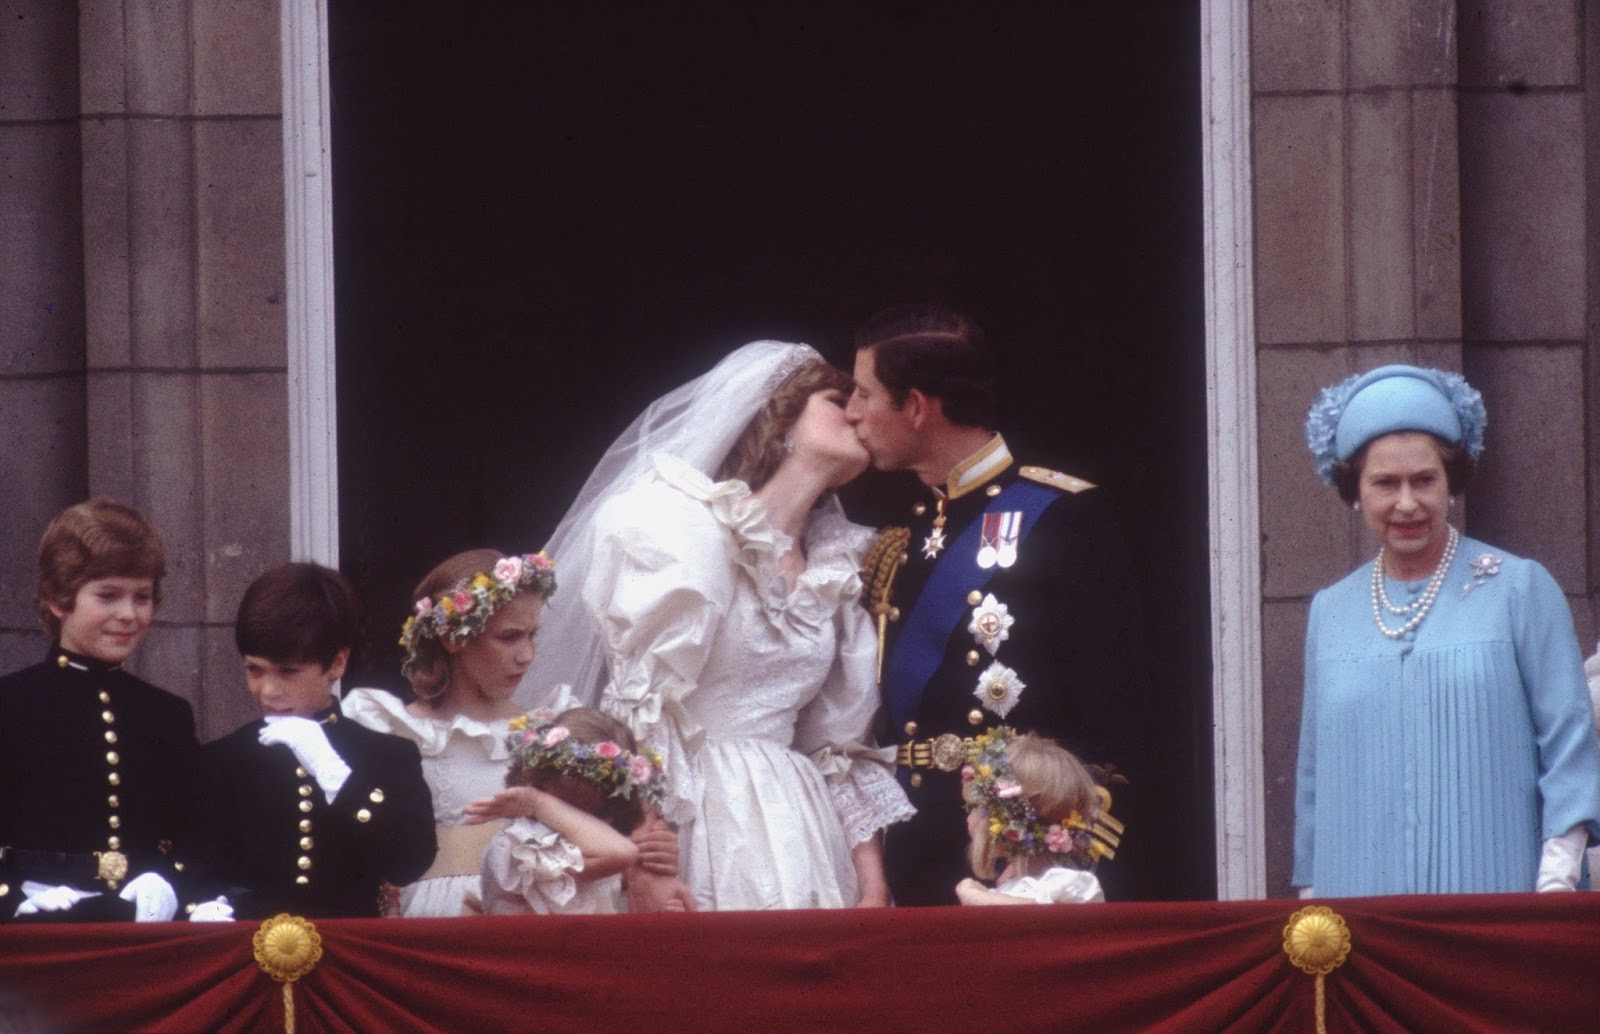 Photo for the royal wedding photograph album 1981